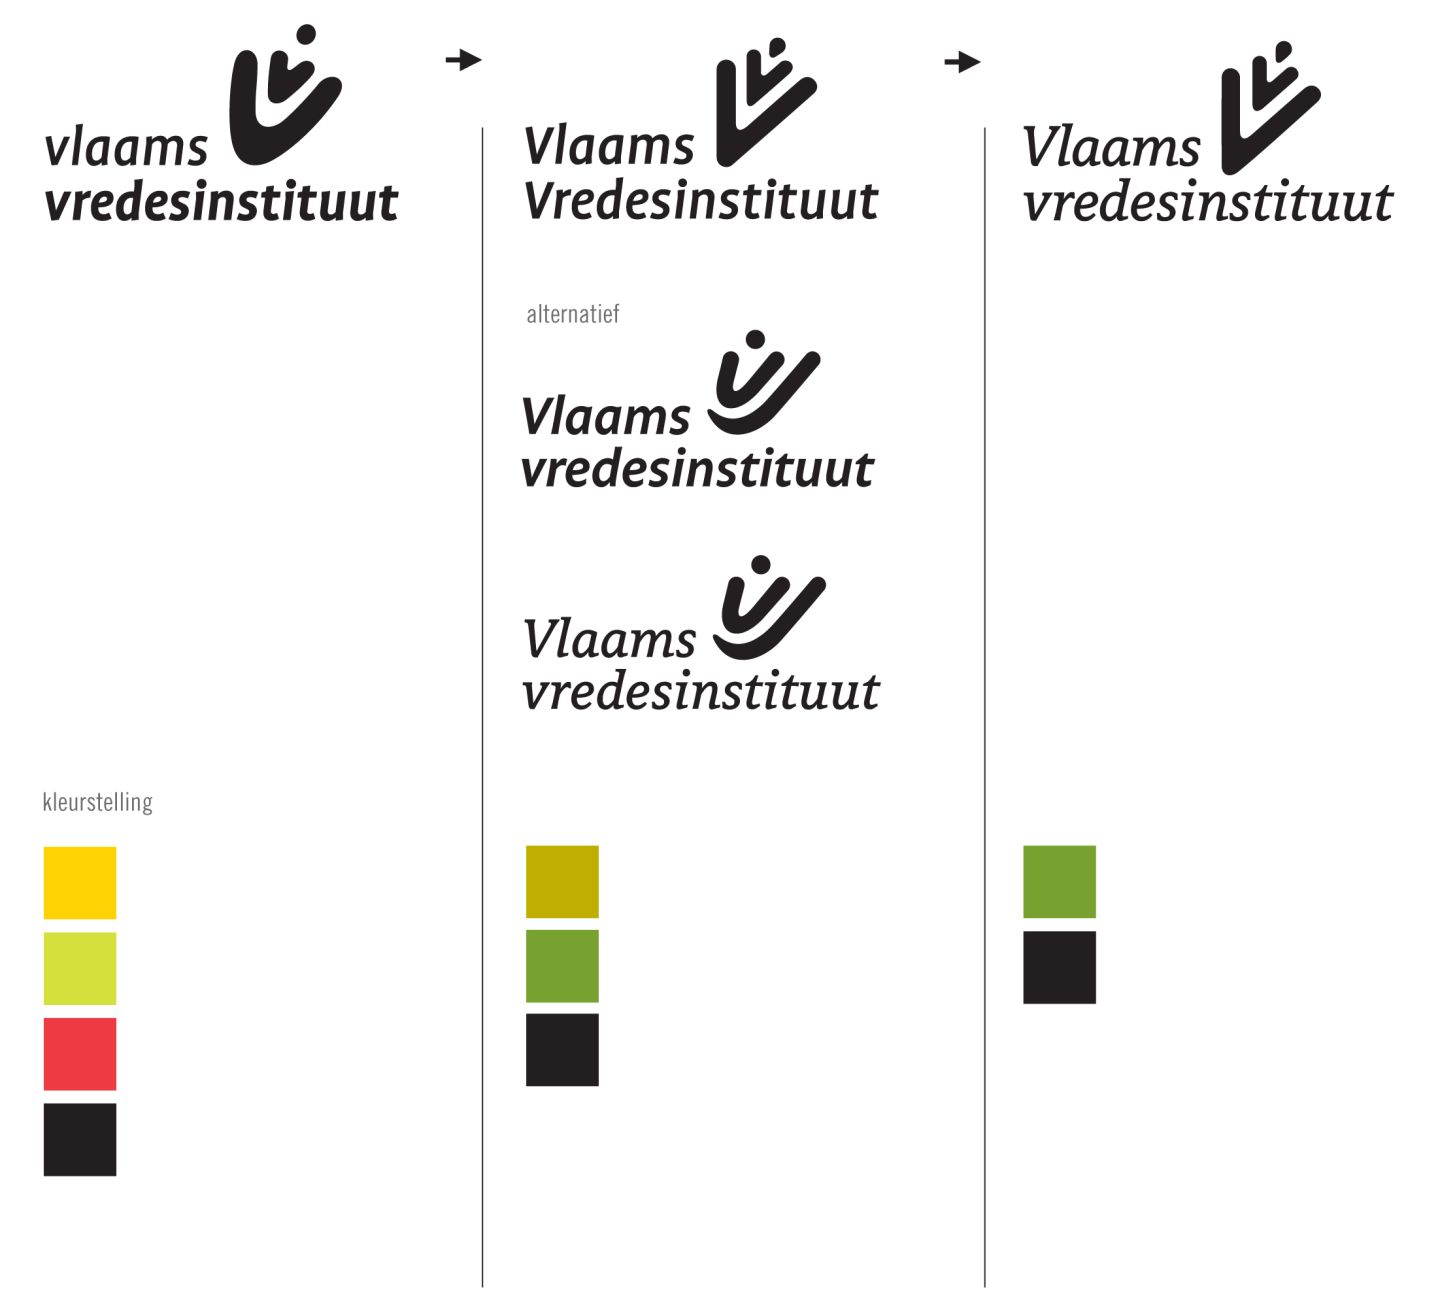 hugo-puttaert-visionandfactory-vlaams-vredesinstituut